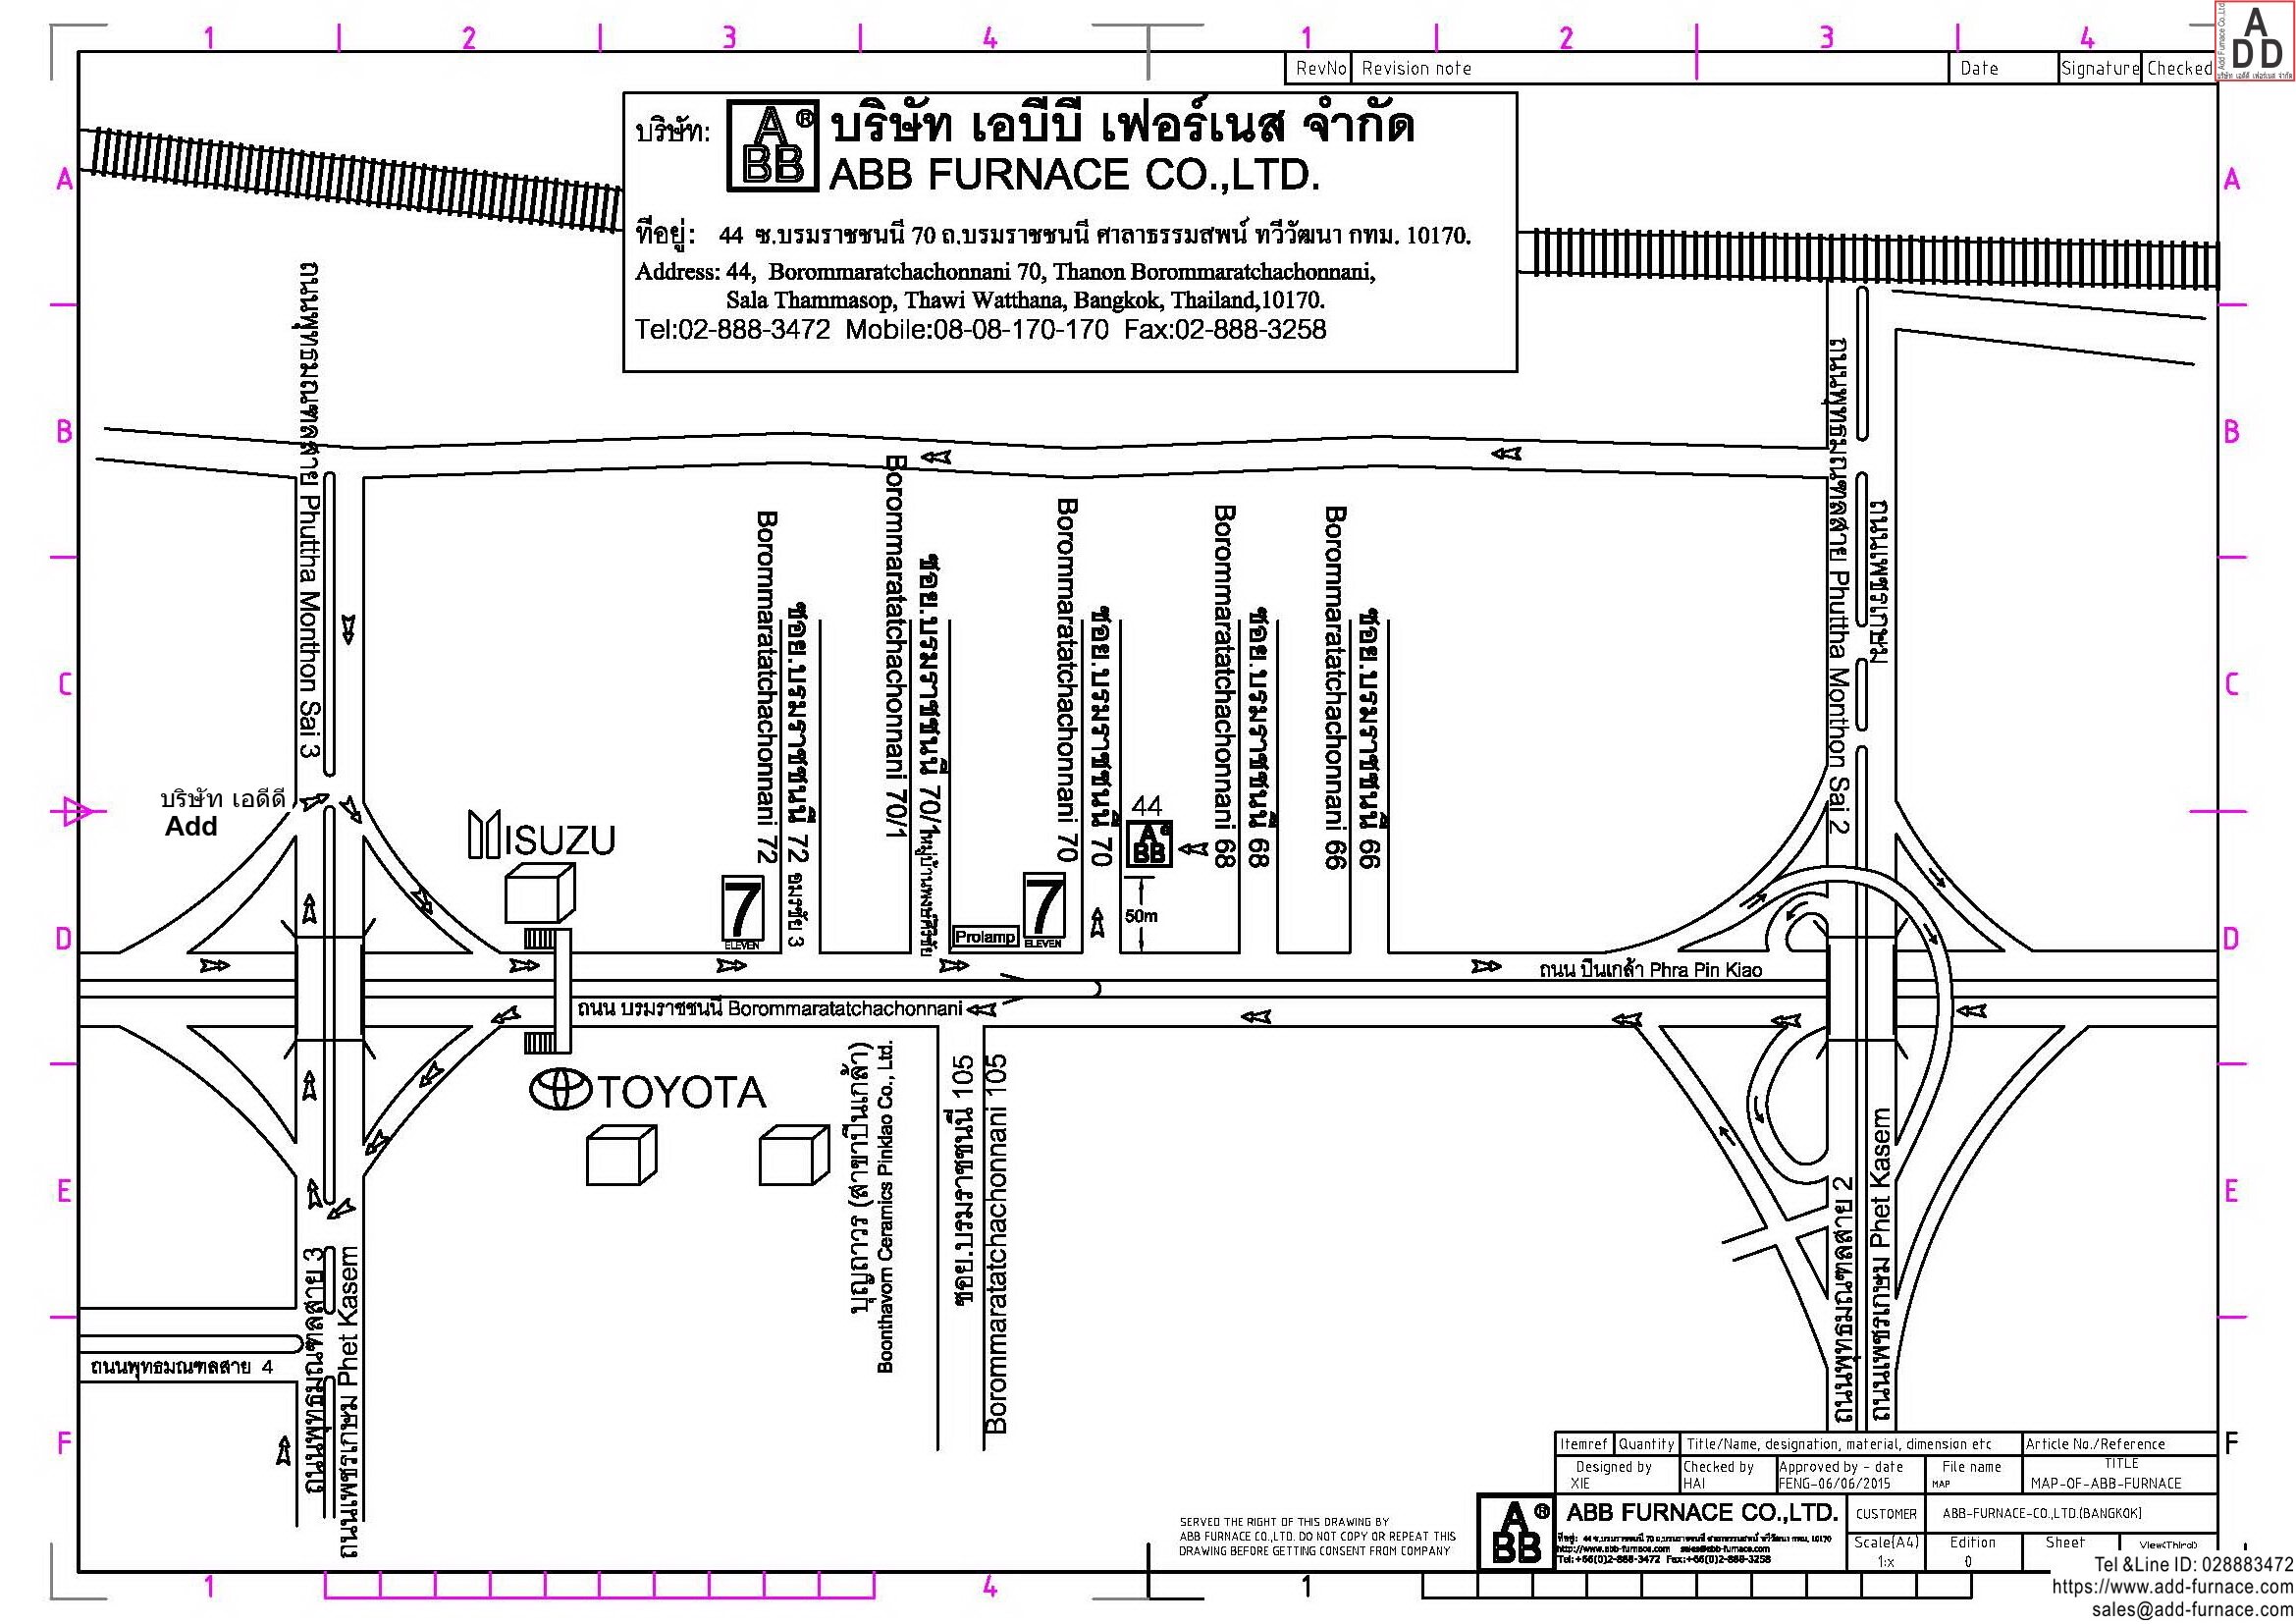 Abb-Furnace-Co.,Ltd-Bangkok-Office-Branch-Map